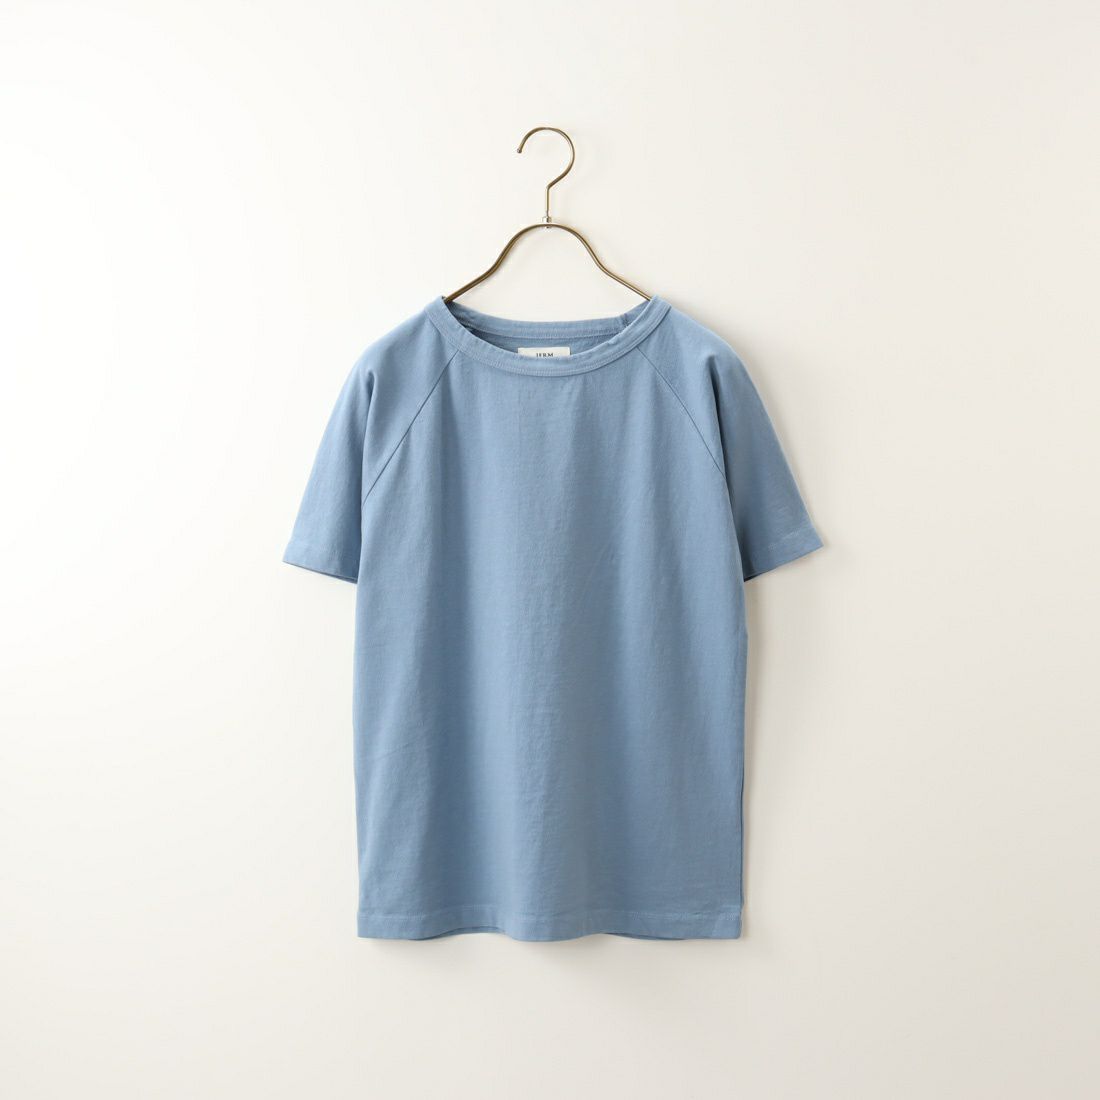 Jf Ready Made [ジェイエフレディメイド] USコットンラグランTシャツ [JFS-2113] 42 S.BLUE